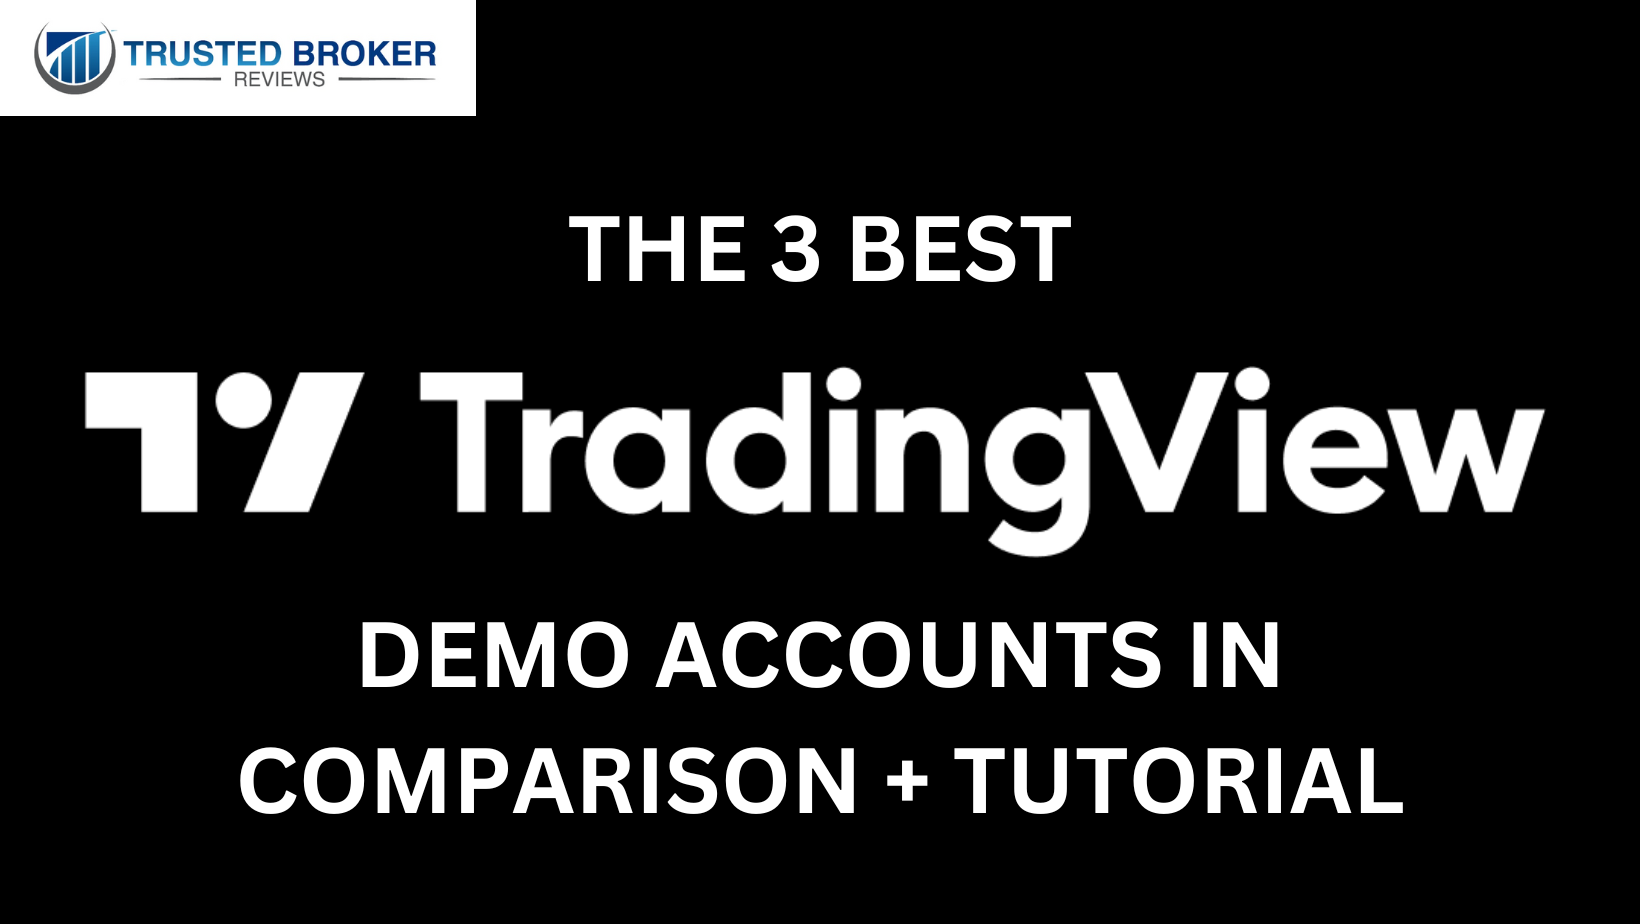 The 3 best TradingView demo accounts in comparison + tutorial